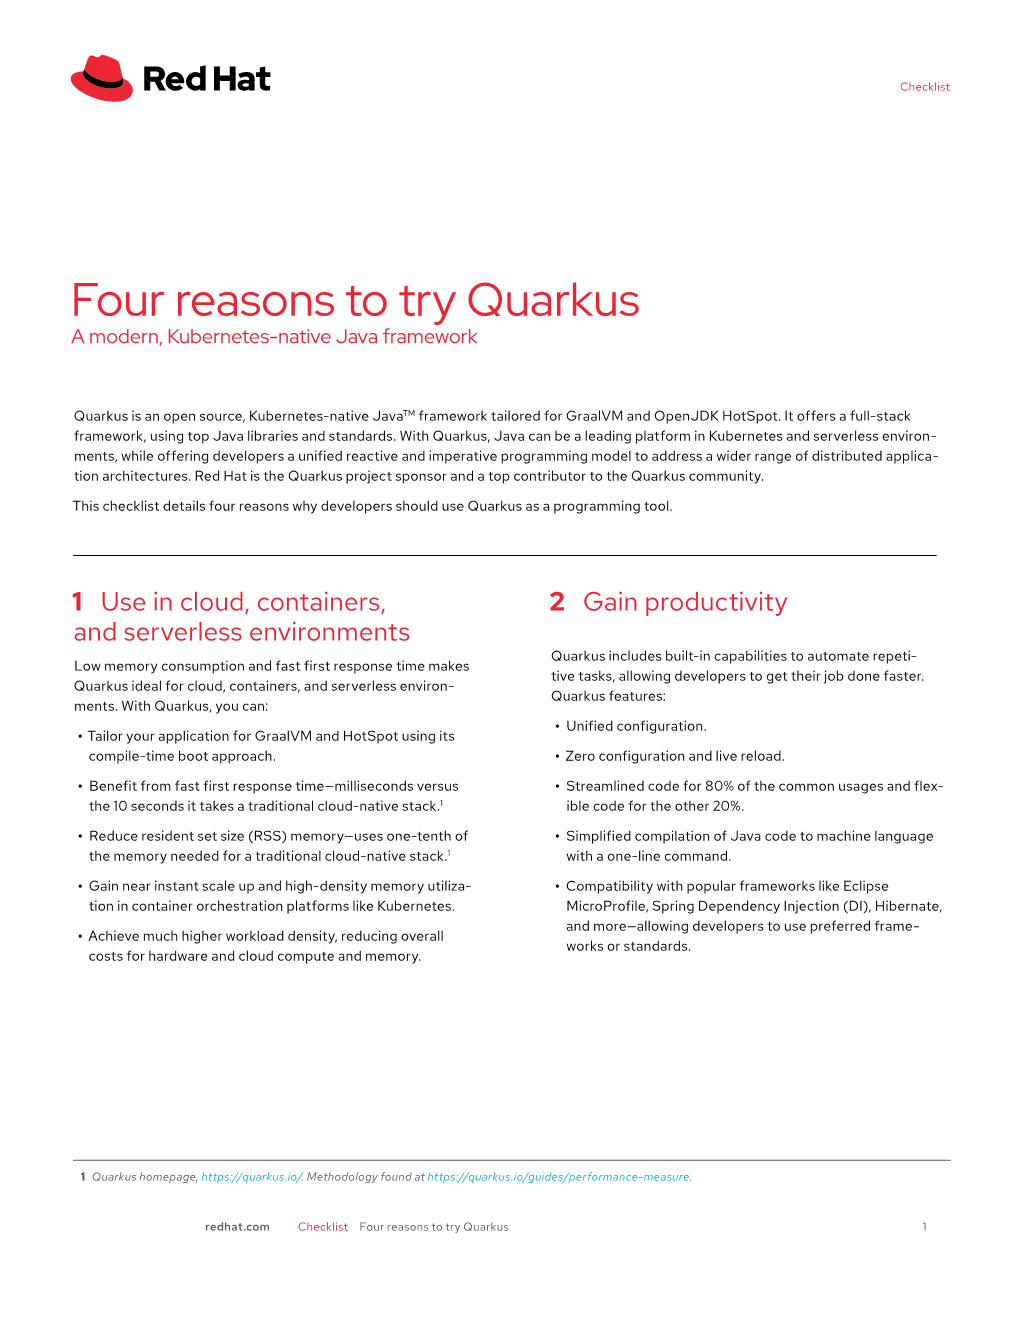 Four Reasons to Try Quarkus a Modern, Kubernetes-Native Java Framework